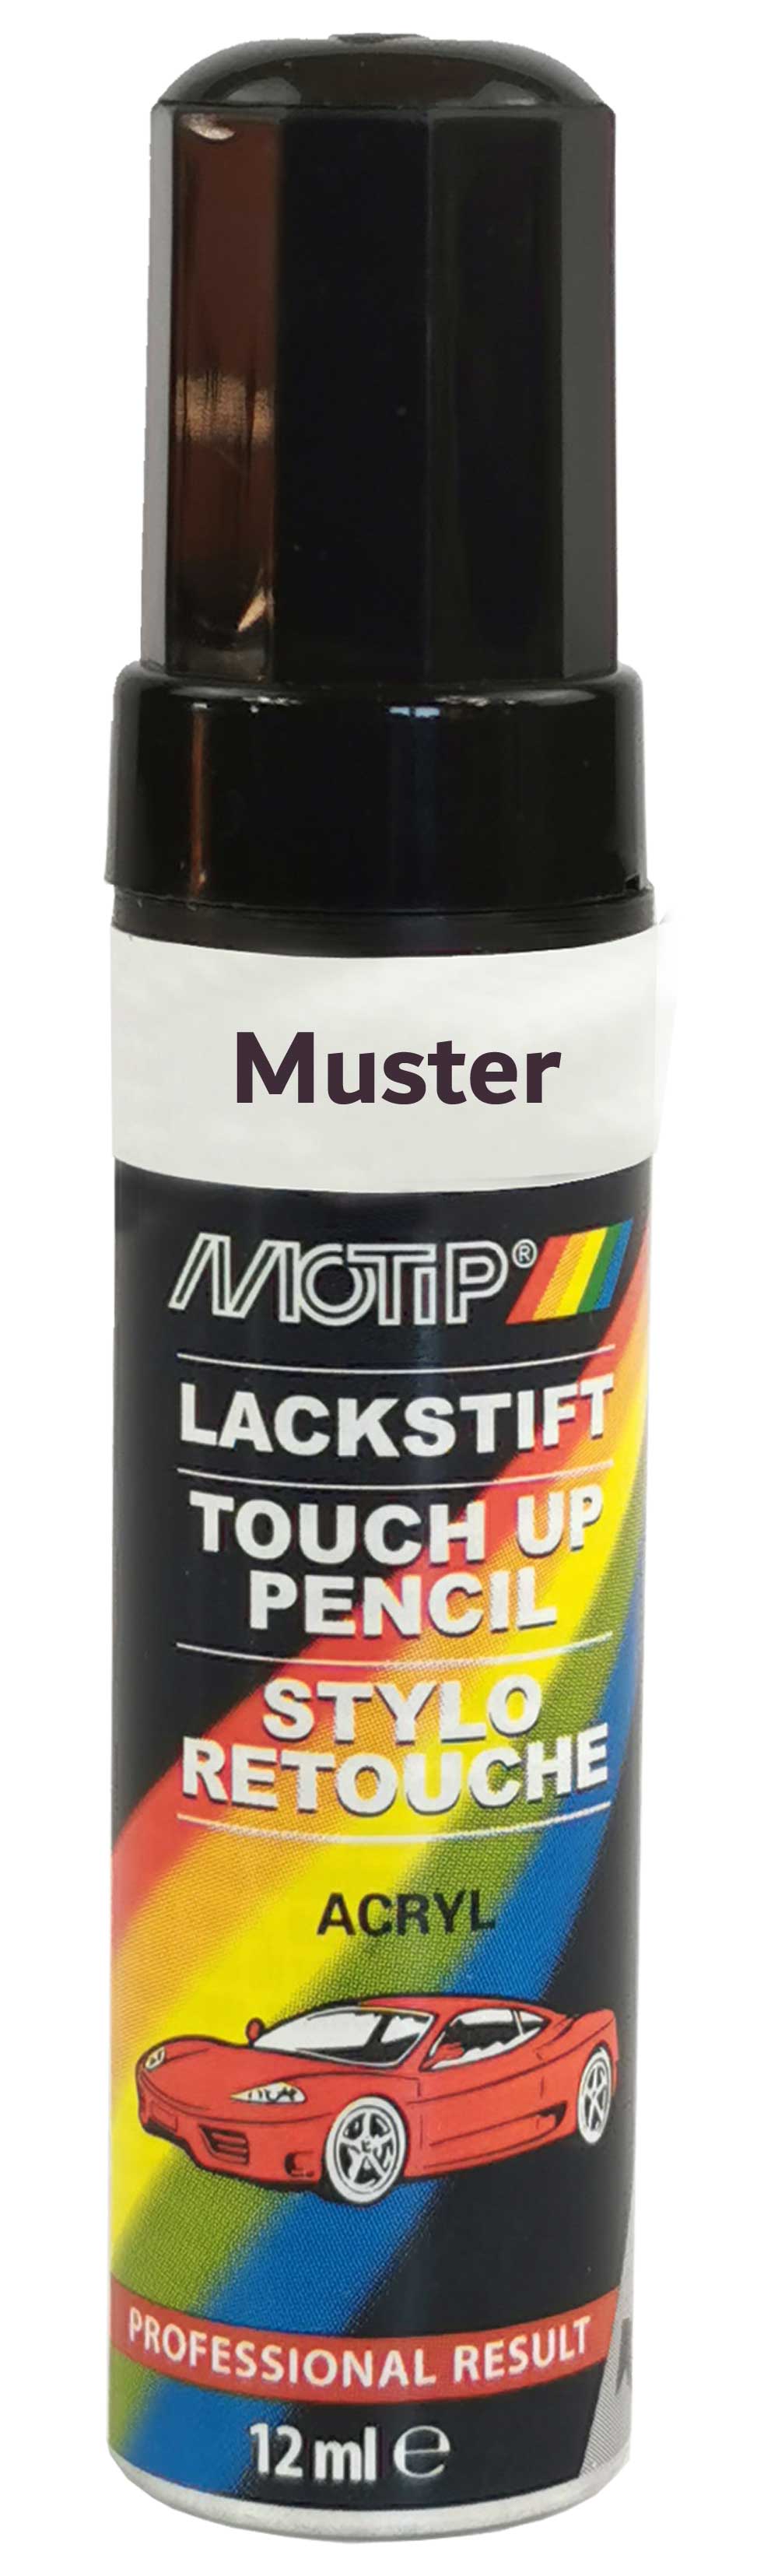 Motip Lack-Stift blau 12ml 954565